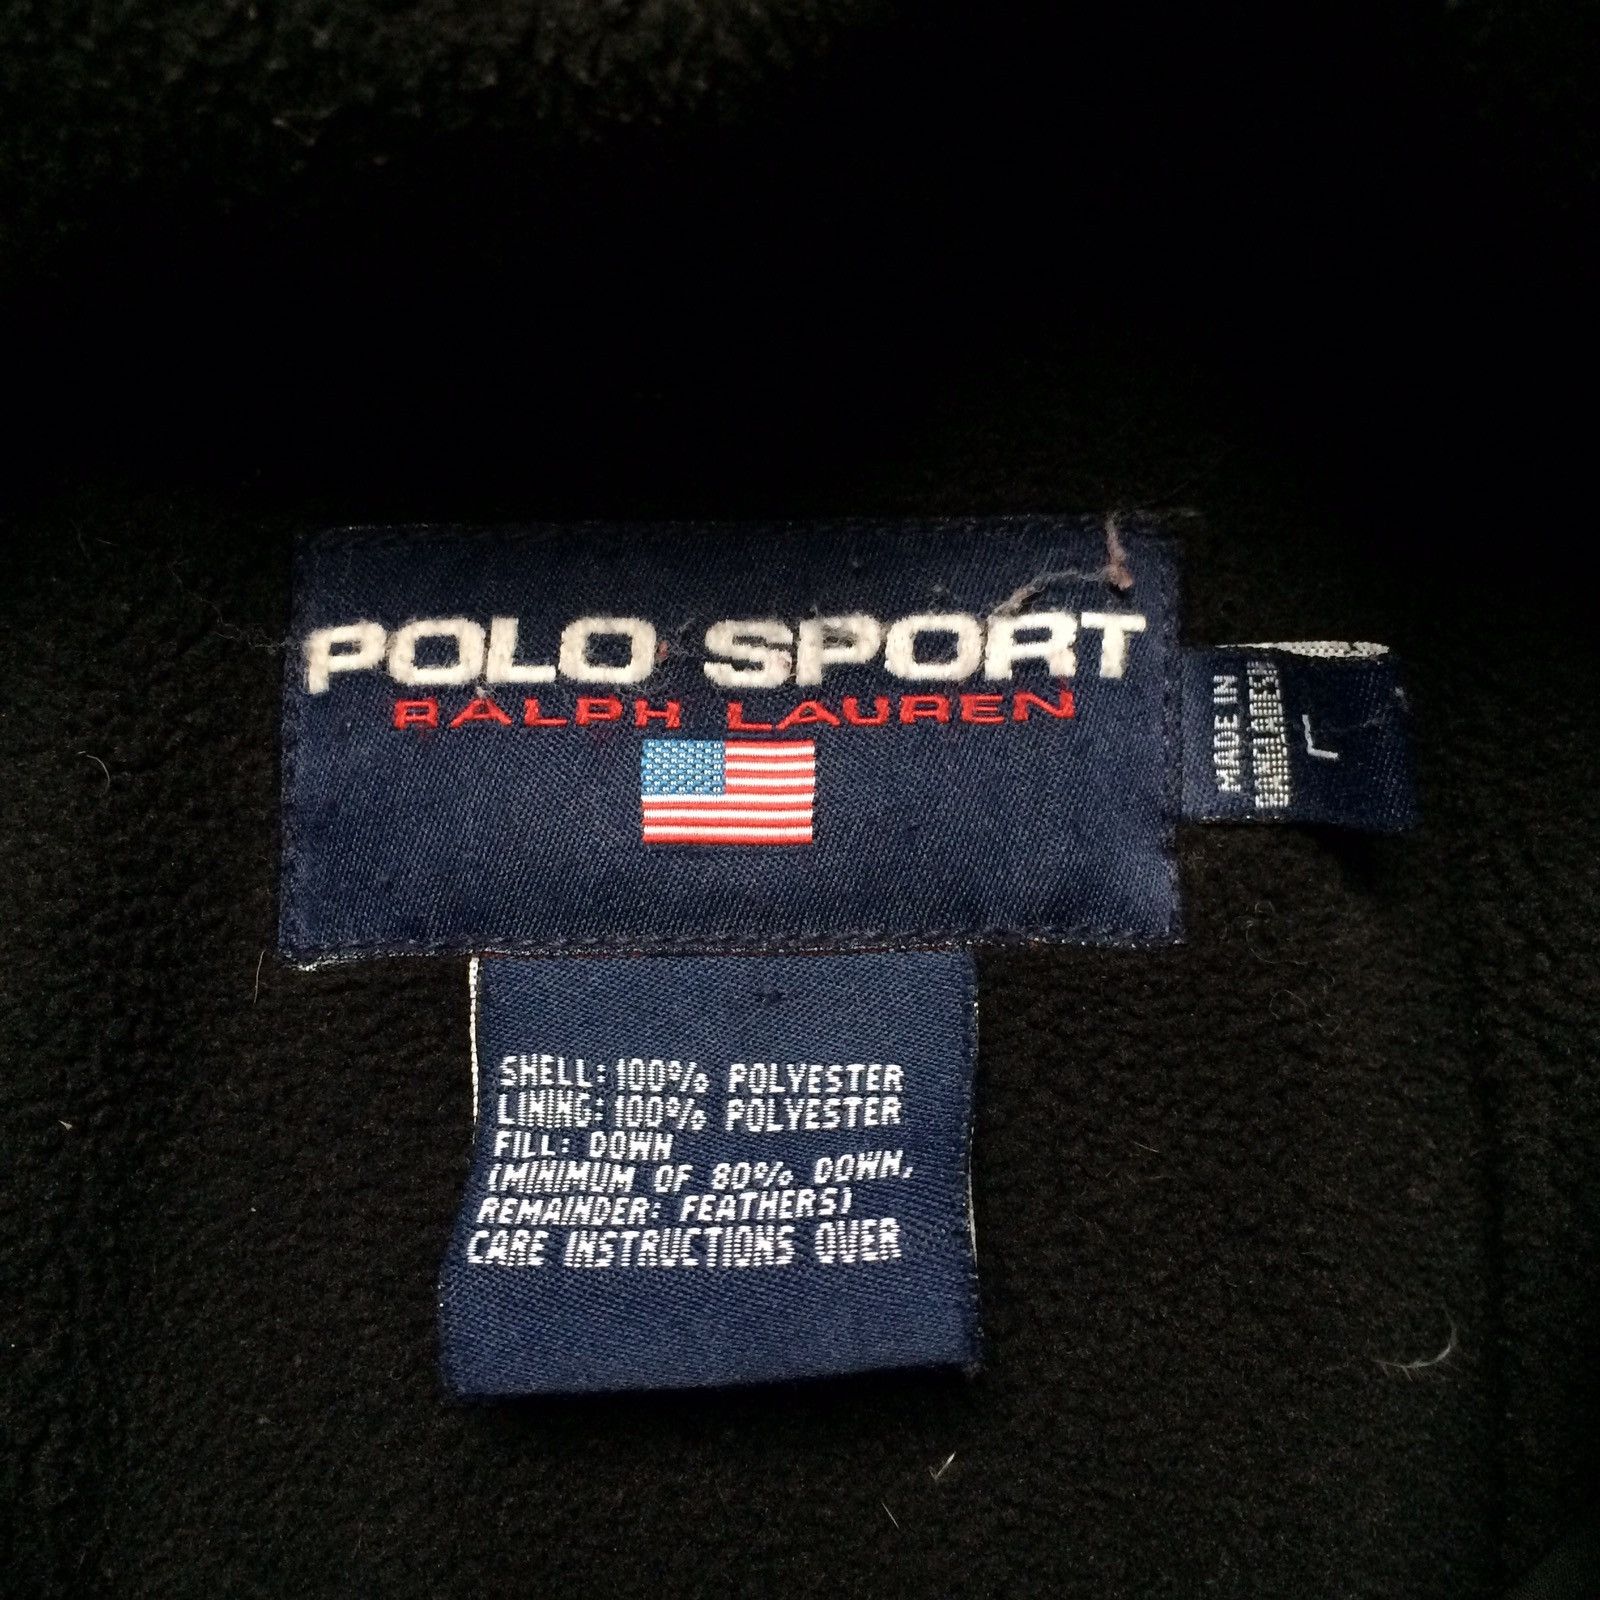 Polo Ralph Lauren Polo Sport Puffer Jacket Size US L / EU 52-54 / 3 - 13 Preview